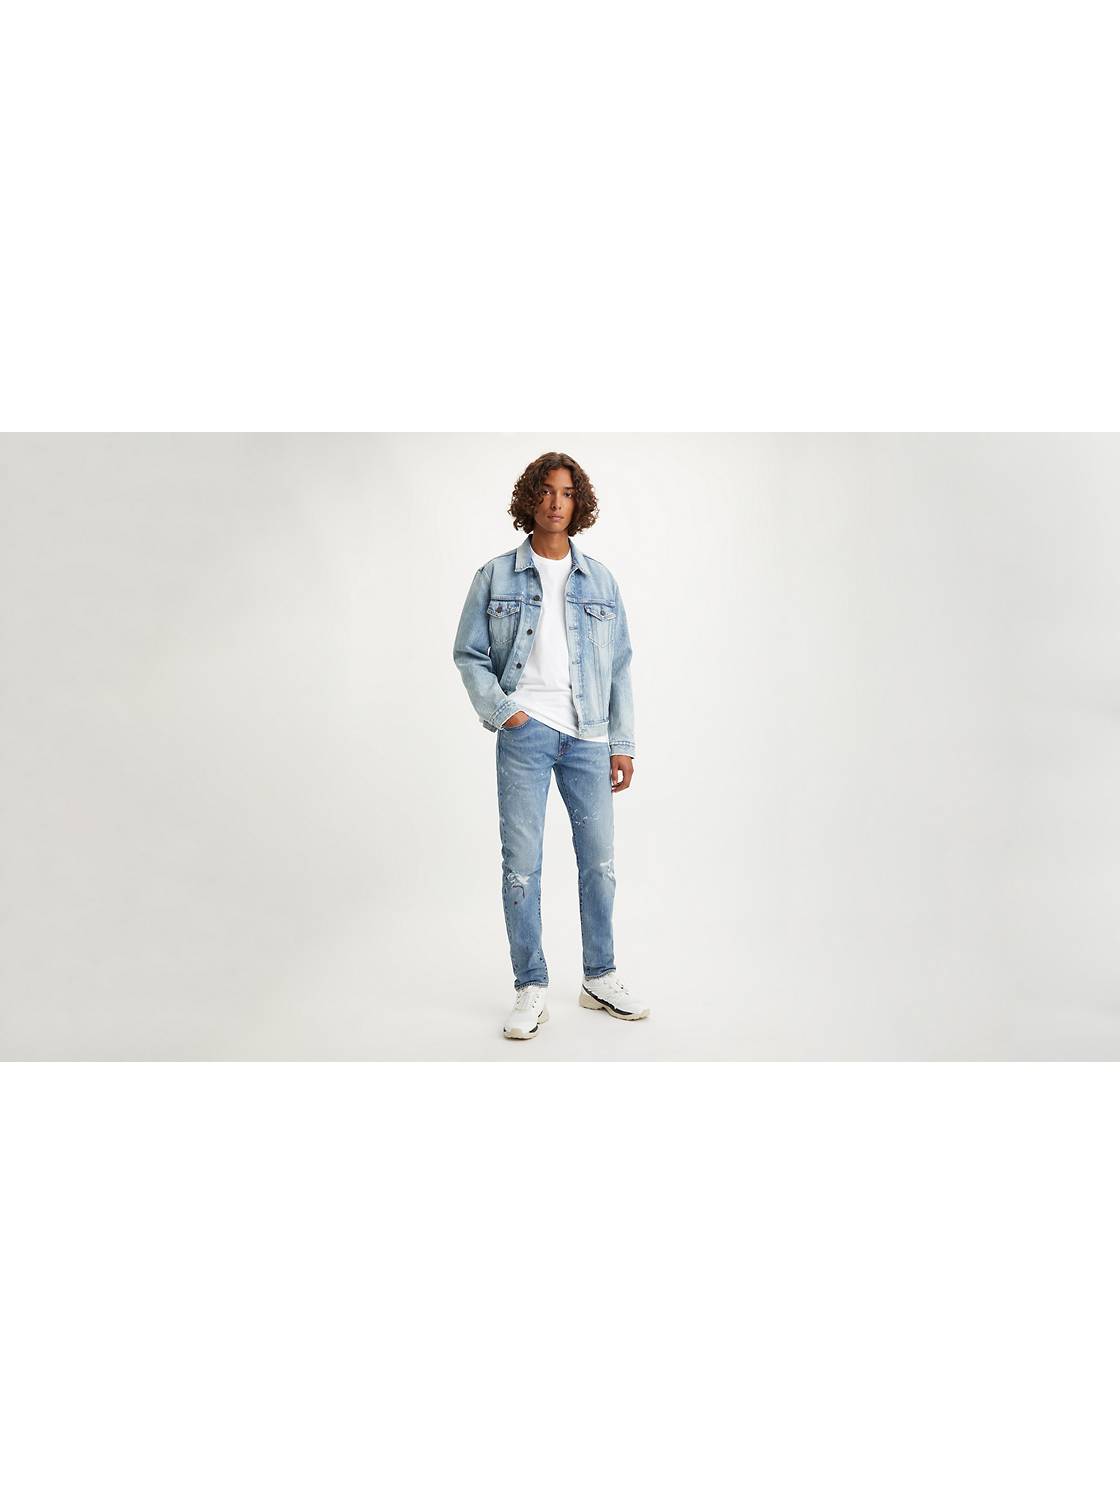 Levi's® 512™ Jeans | Men's Slim Tapered Fit Jeans | Levi's® GB